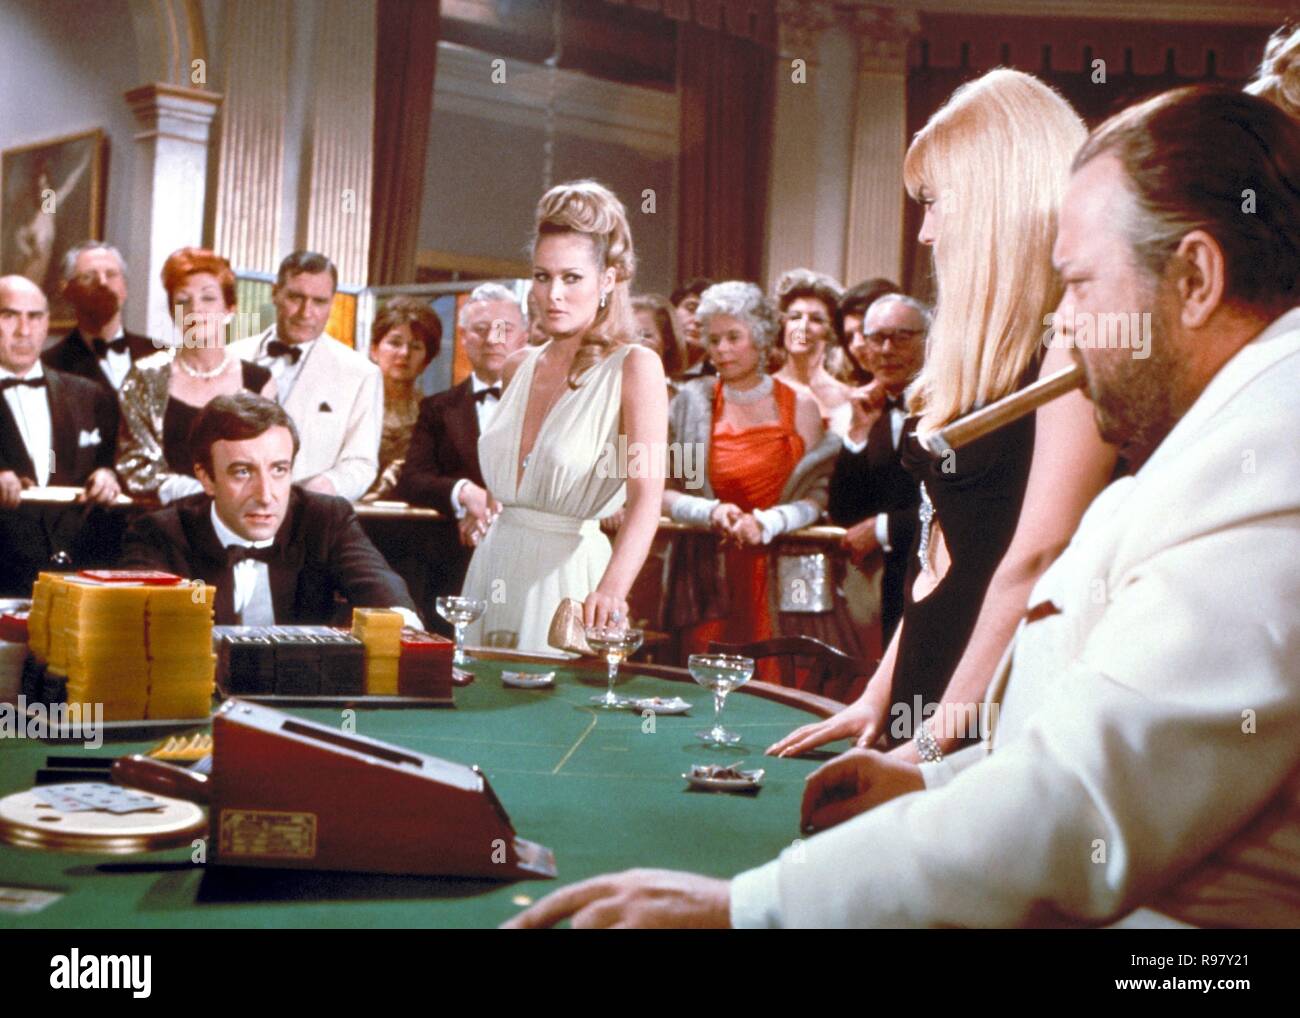 Original film title: CASINO ROYALE. English title: 007, JAMES BOND: CASINO ROYALE. Year: 1967. Director: JOHN HUSTON; ROBERT PARRISH; KEN HUGHES; VAL GUEST. Stars: URSULA ANDRESS; ORSON WELLES; PETER SELLERS. Credit: COLUMBIA/FAMOUS ARTISTS / Album Stock Photo